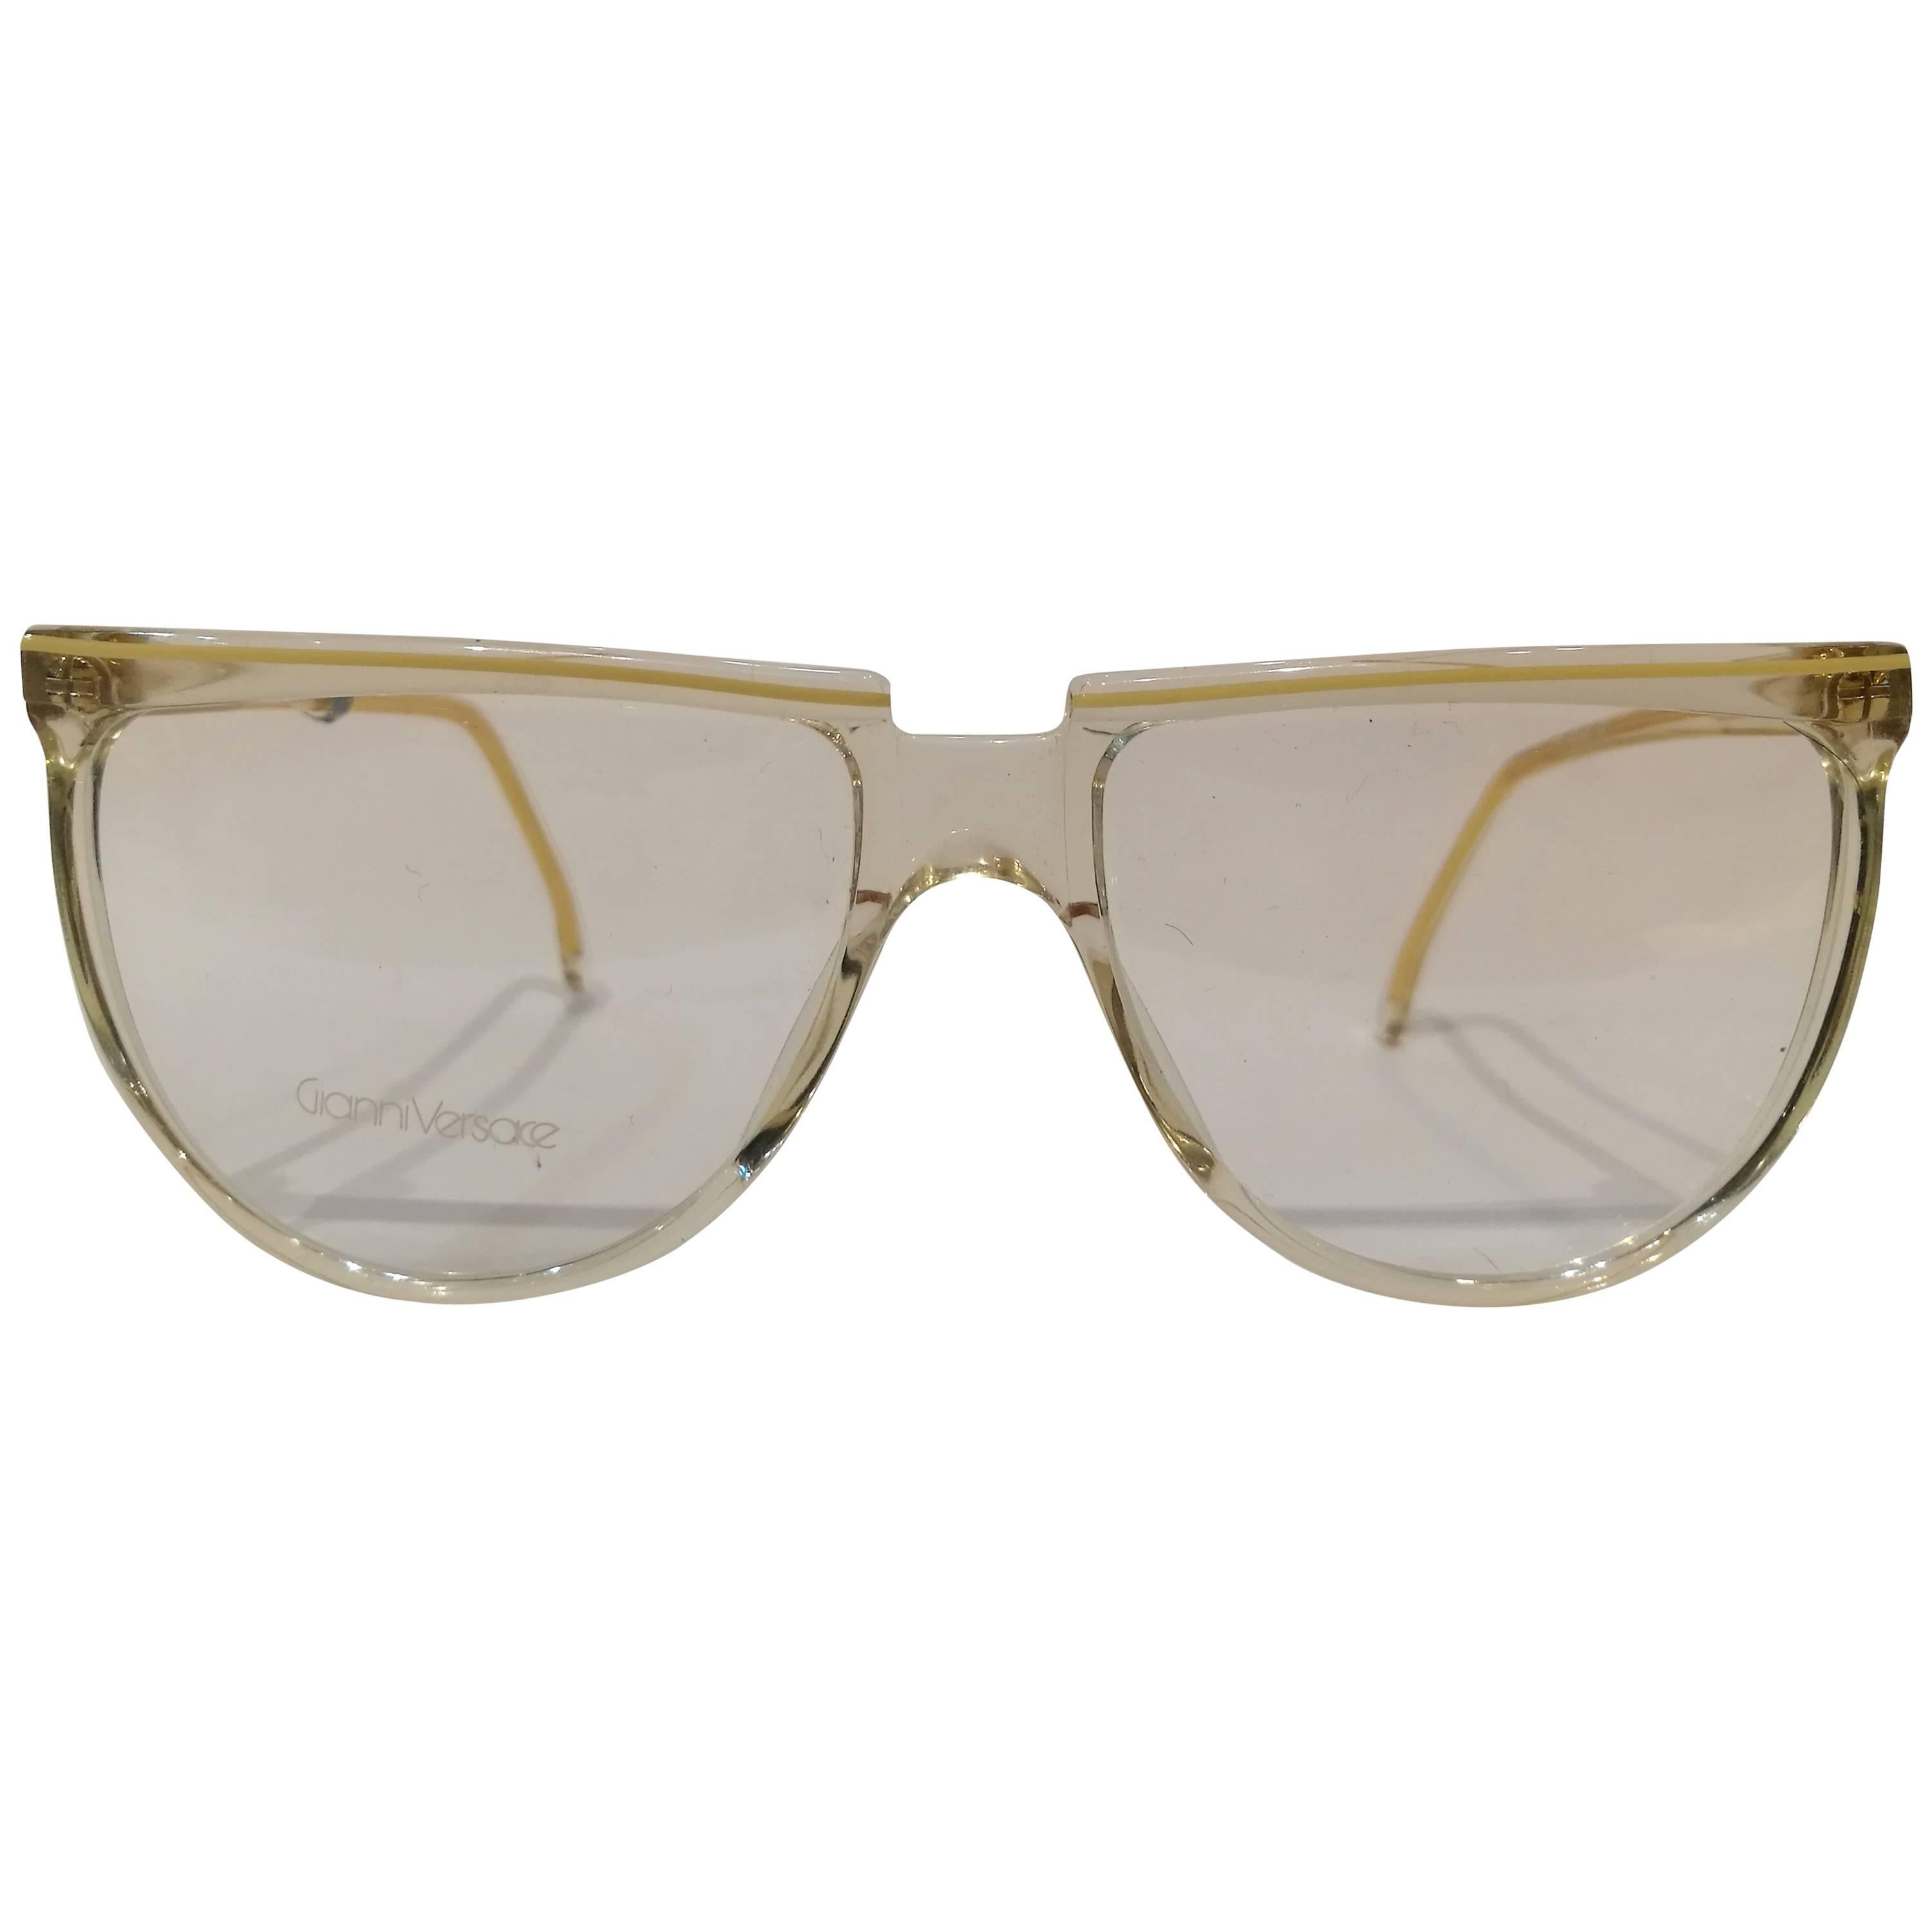 Unworn Gianni Versace frame glasses